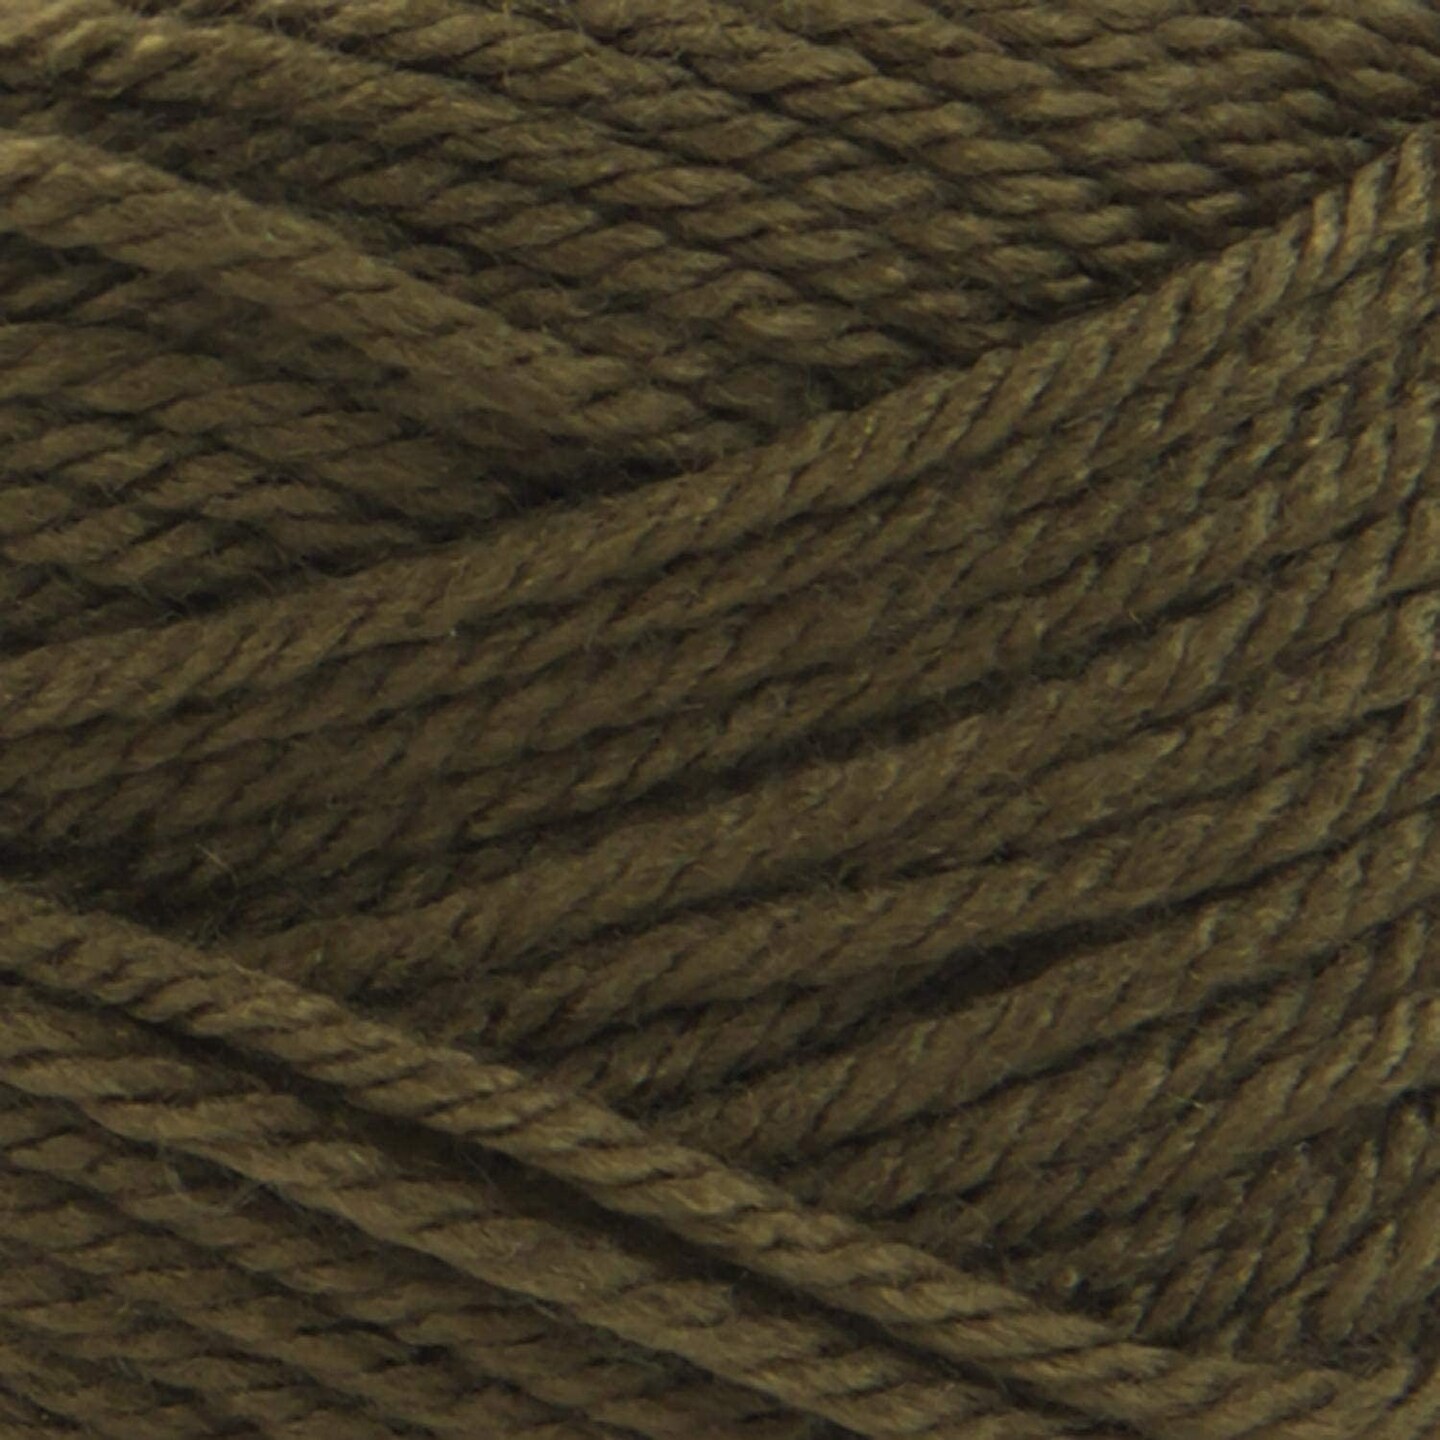 Lion Brand Basic Stitch Anti Pilling Yarn - Olive